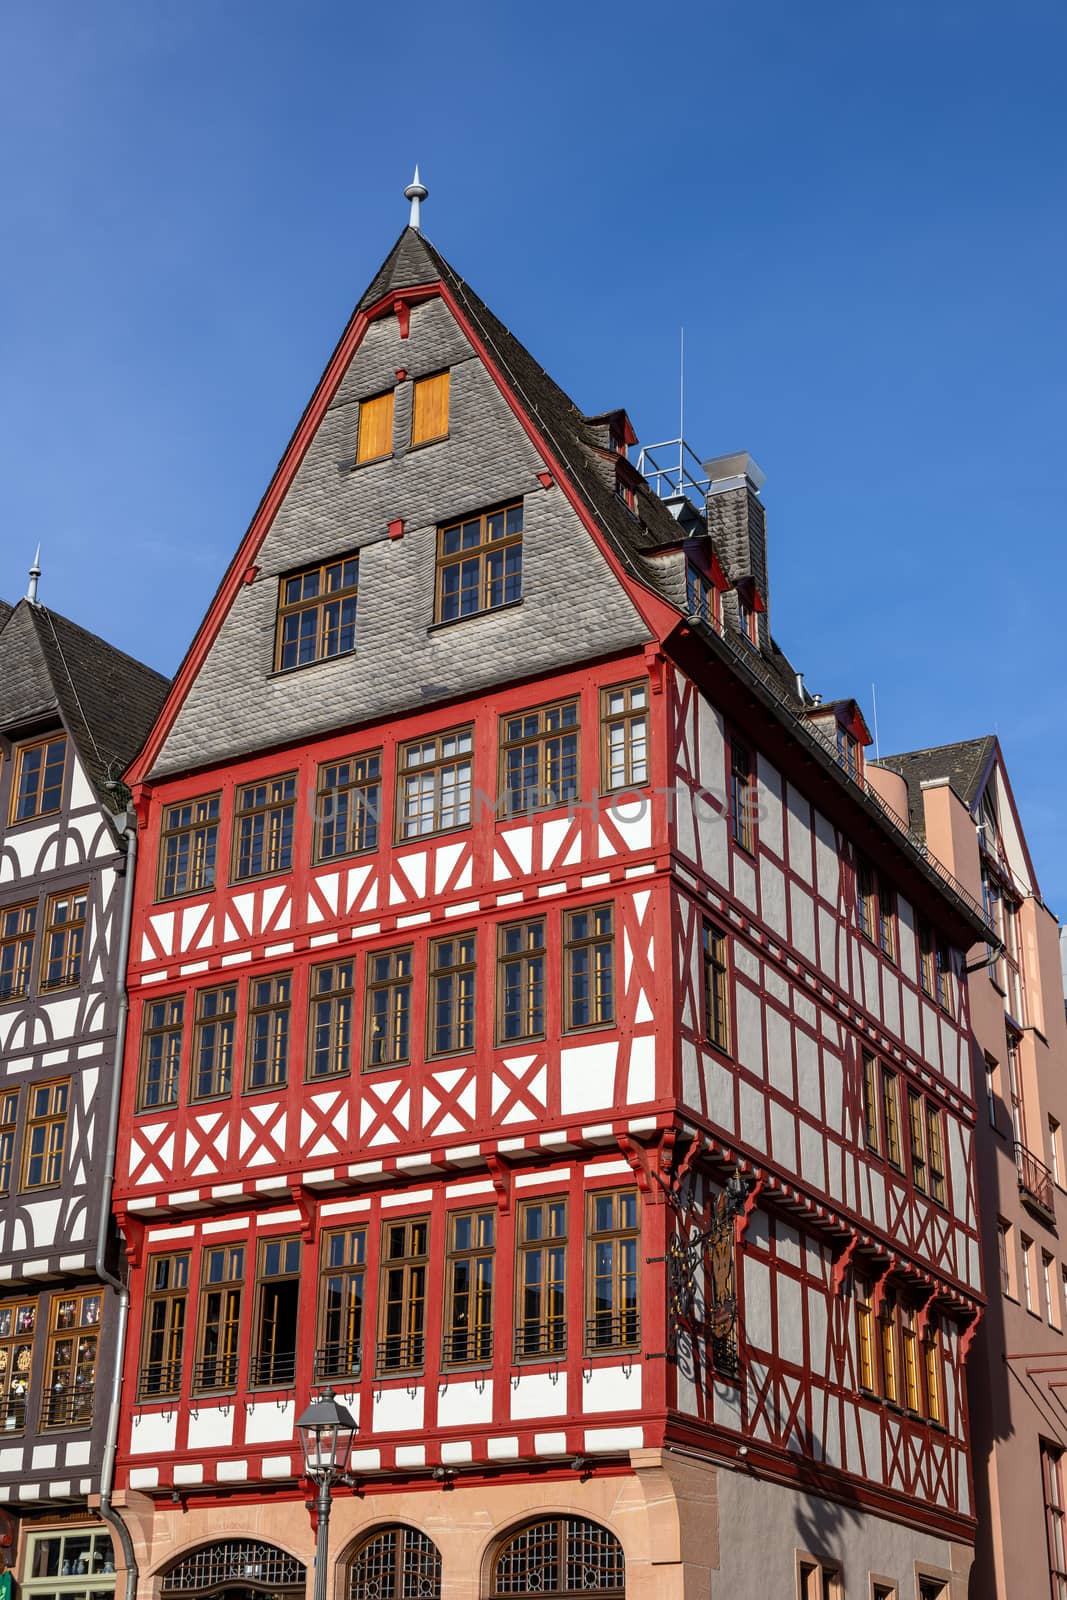 Traditional half-timbered house on Romerberg square, Frankfurt, Germany